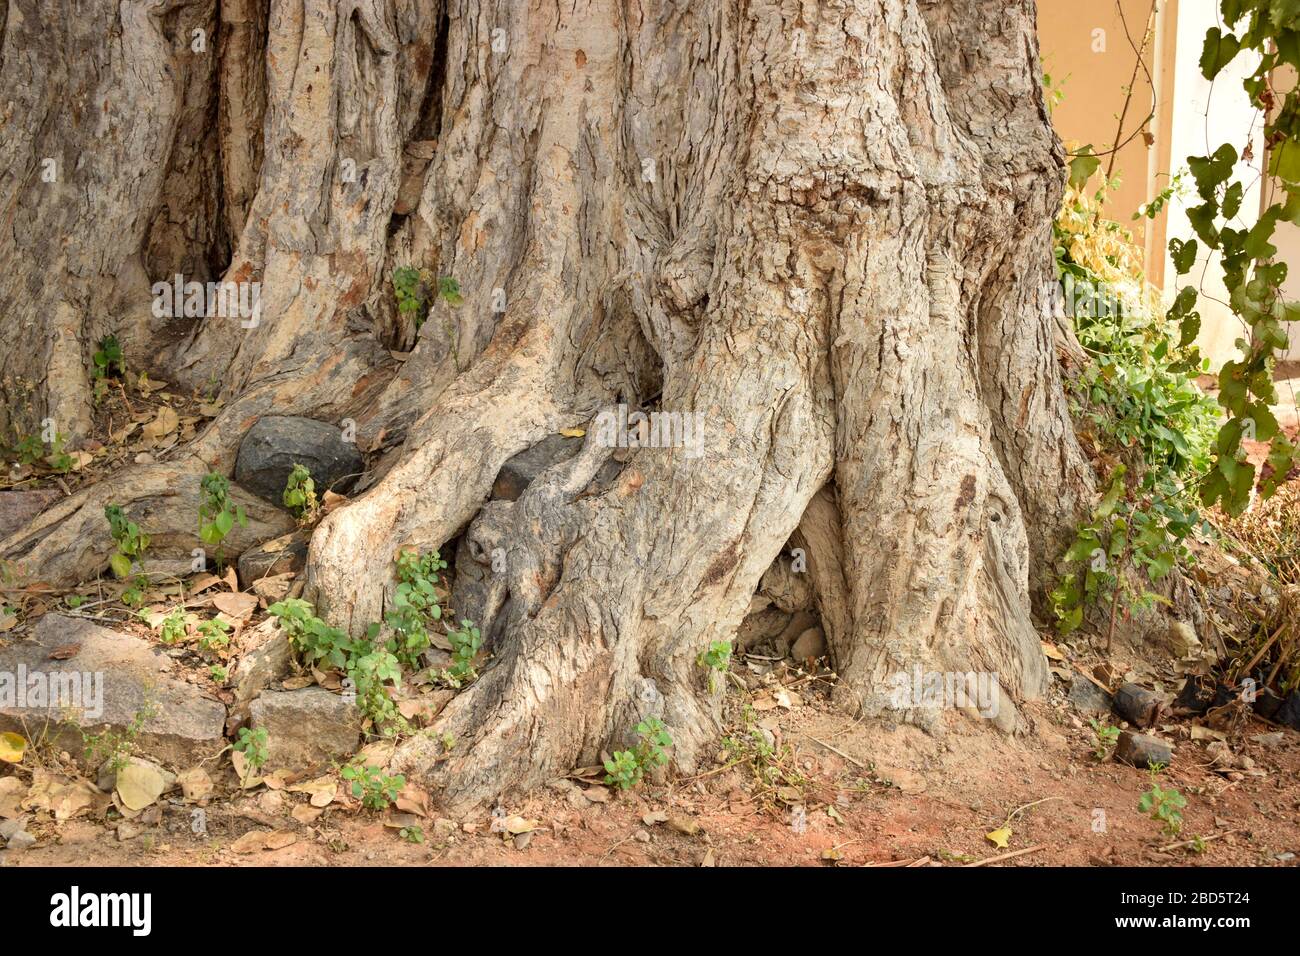 Natural Big Banyan Tree Roots in Jungle/Forest Stock imagen Foto de stock